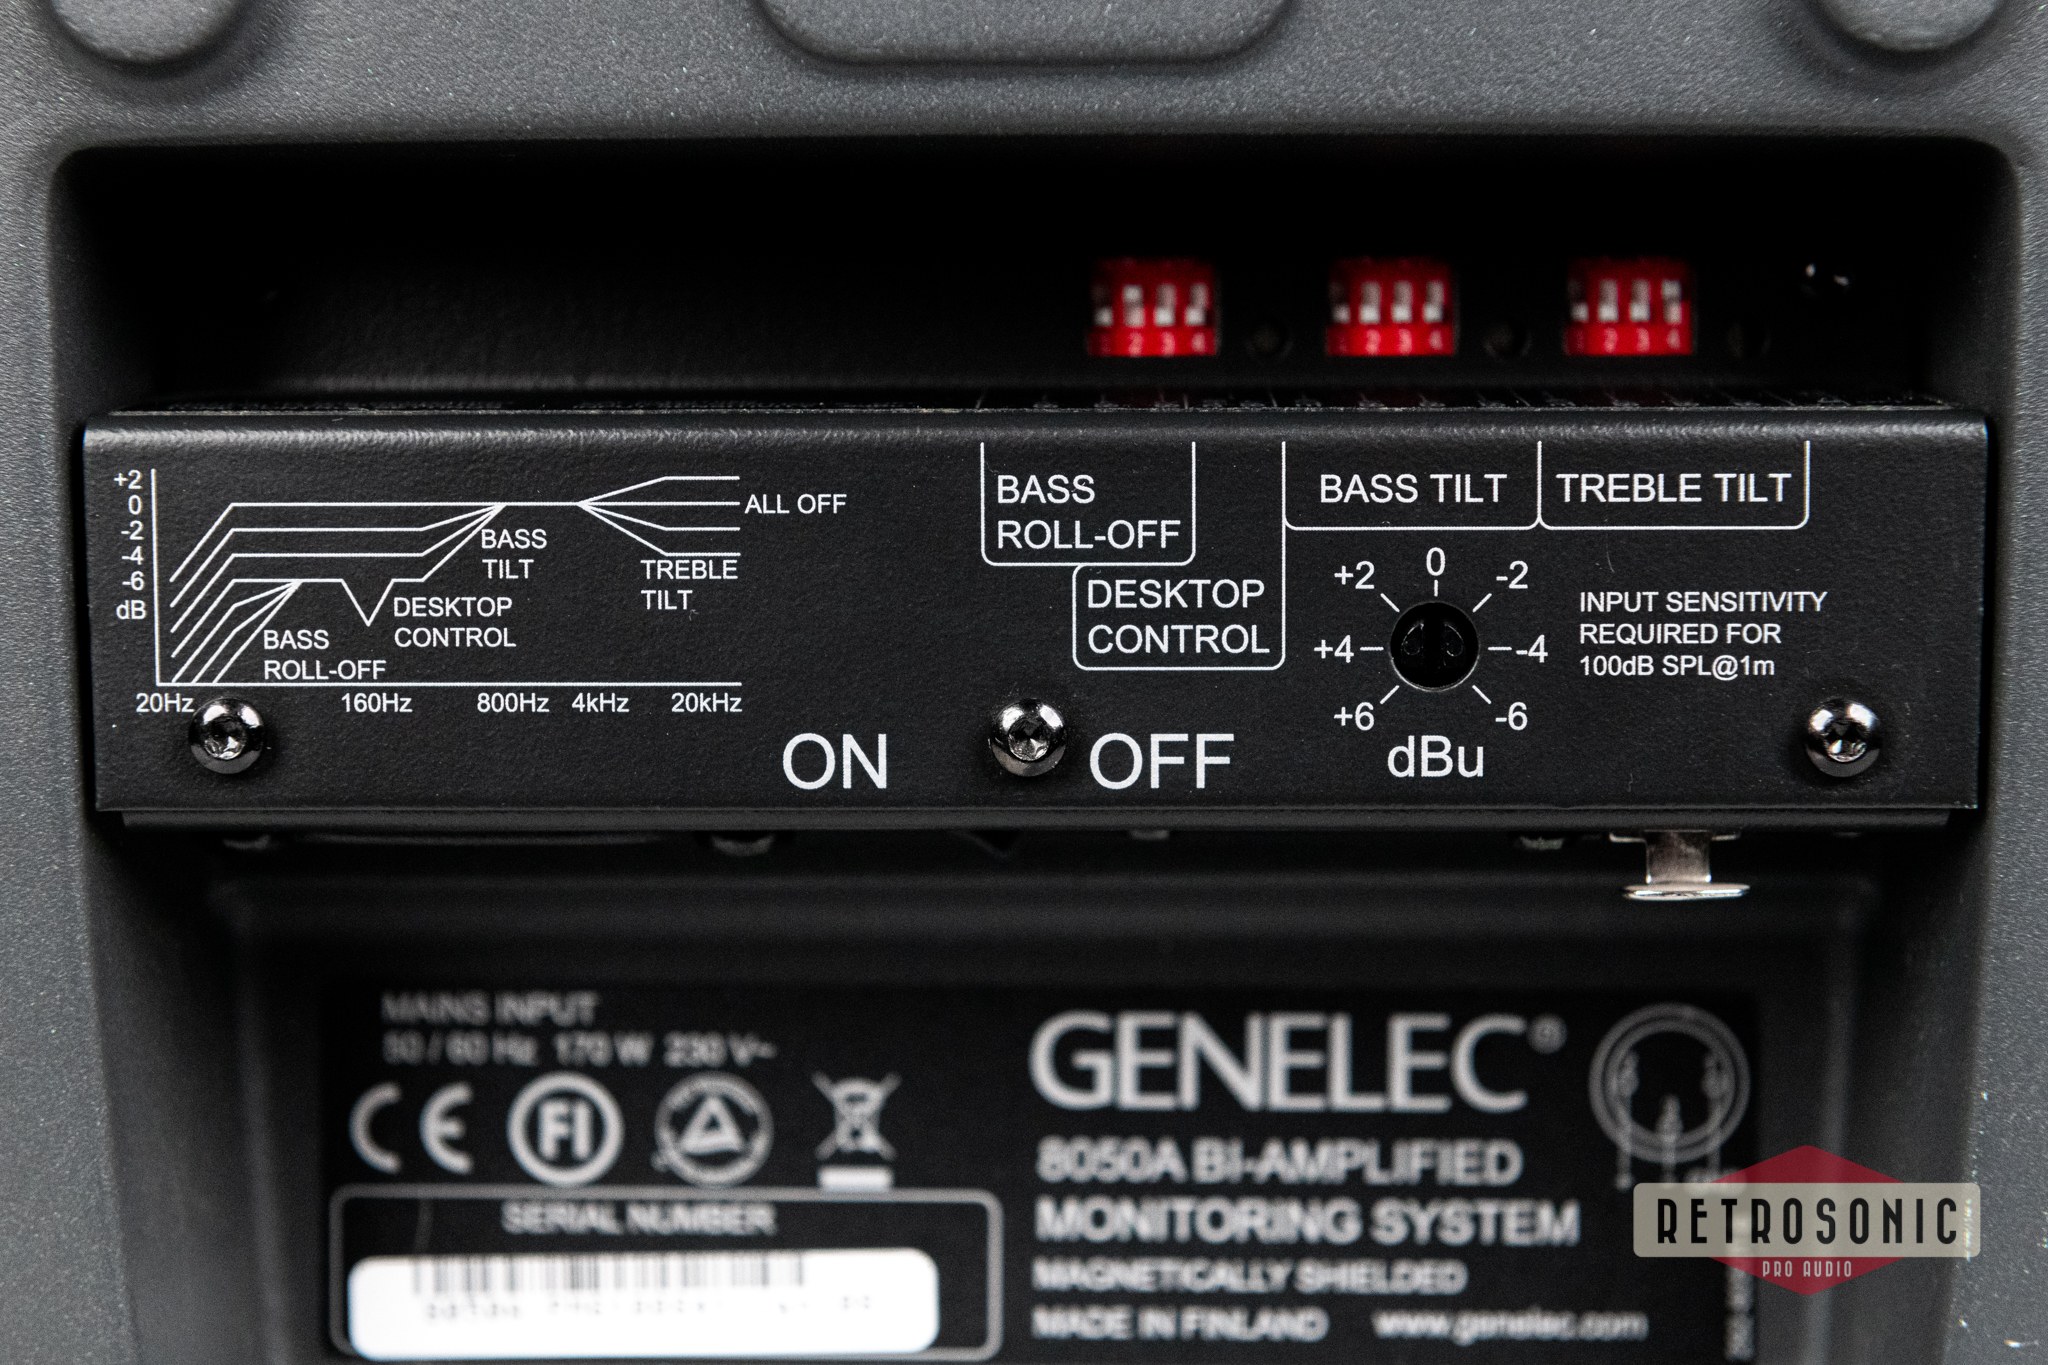 Genelec 8050A Active Studio Monitor Single unit